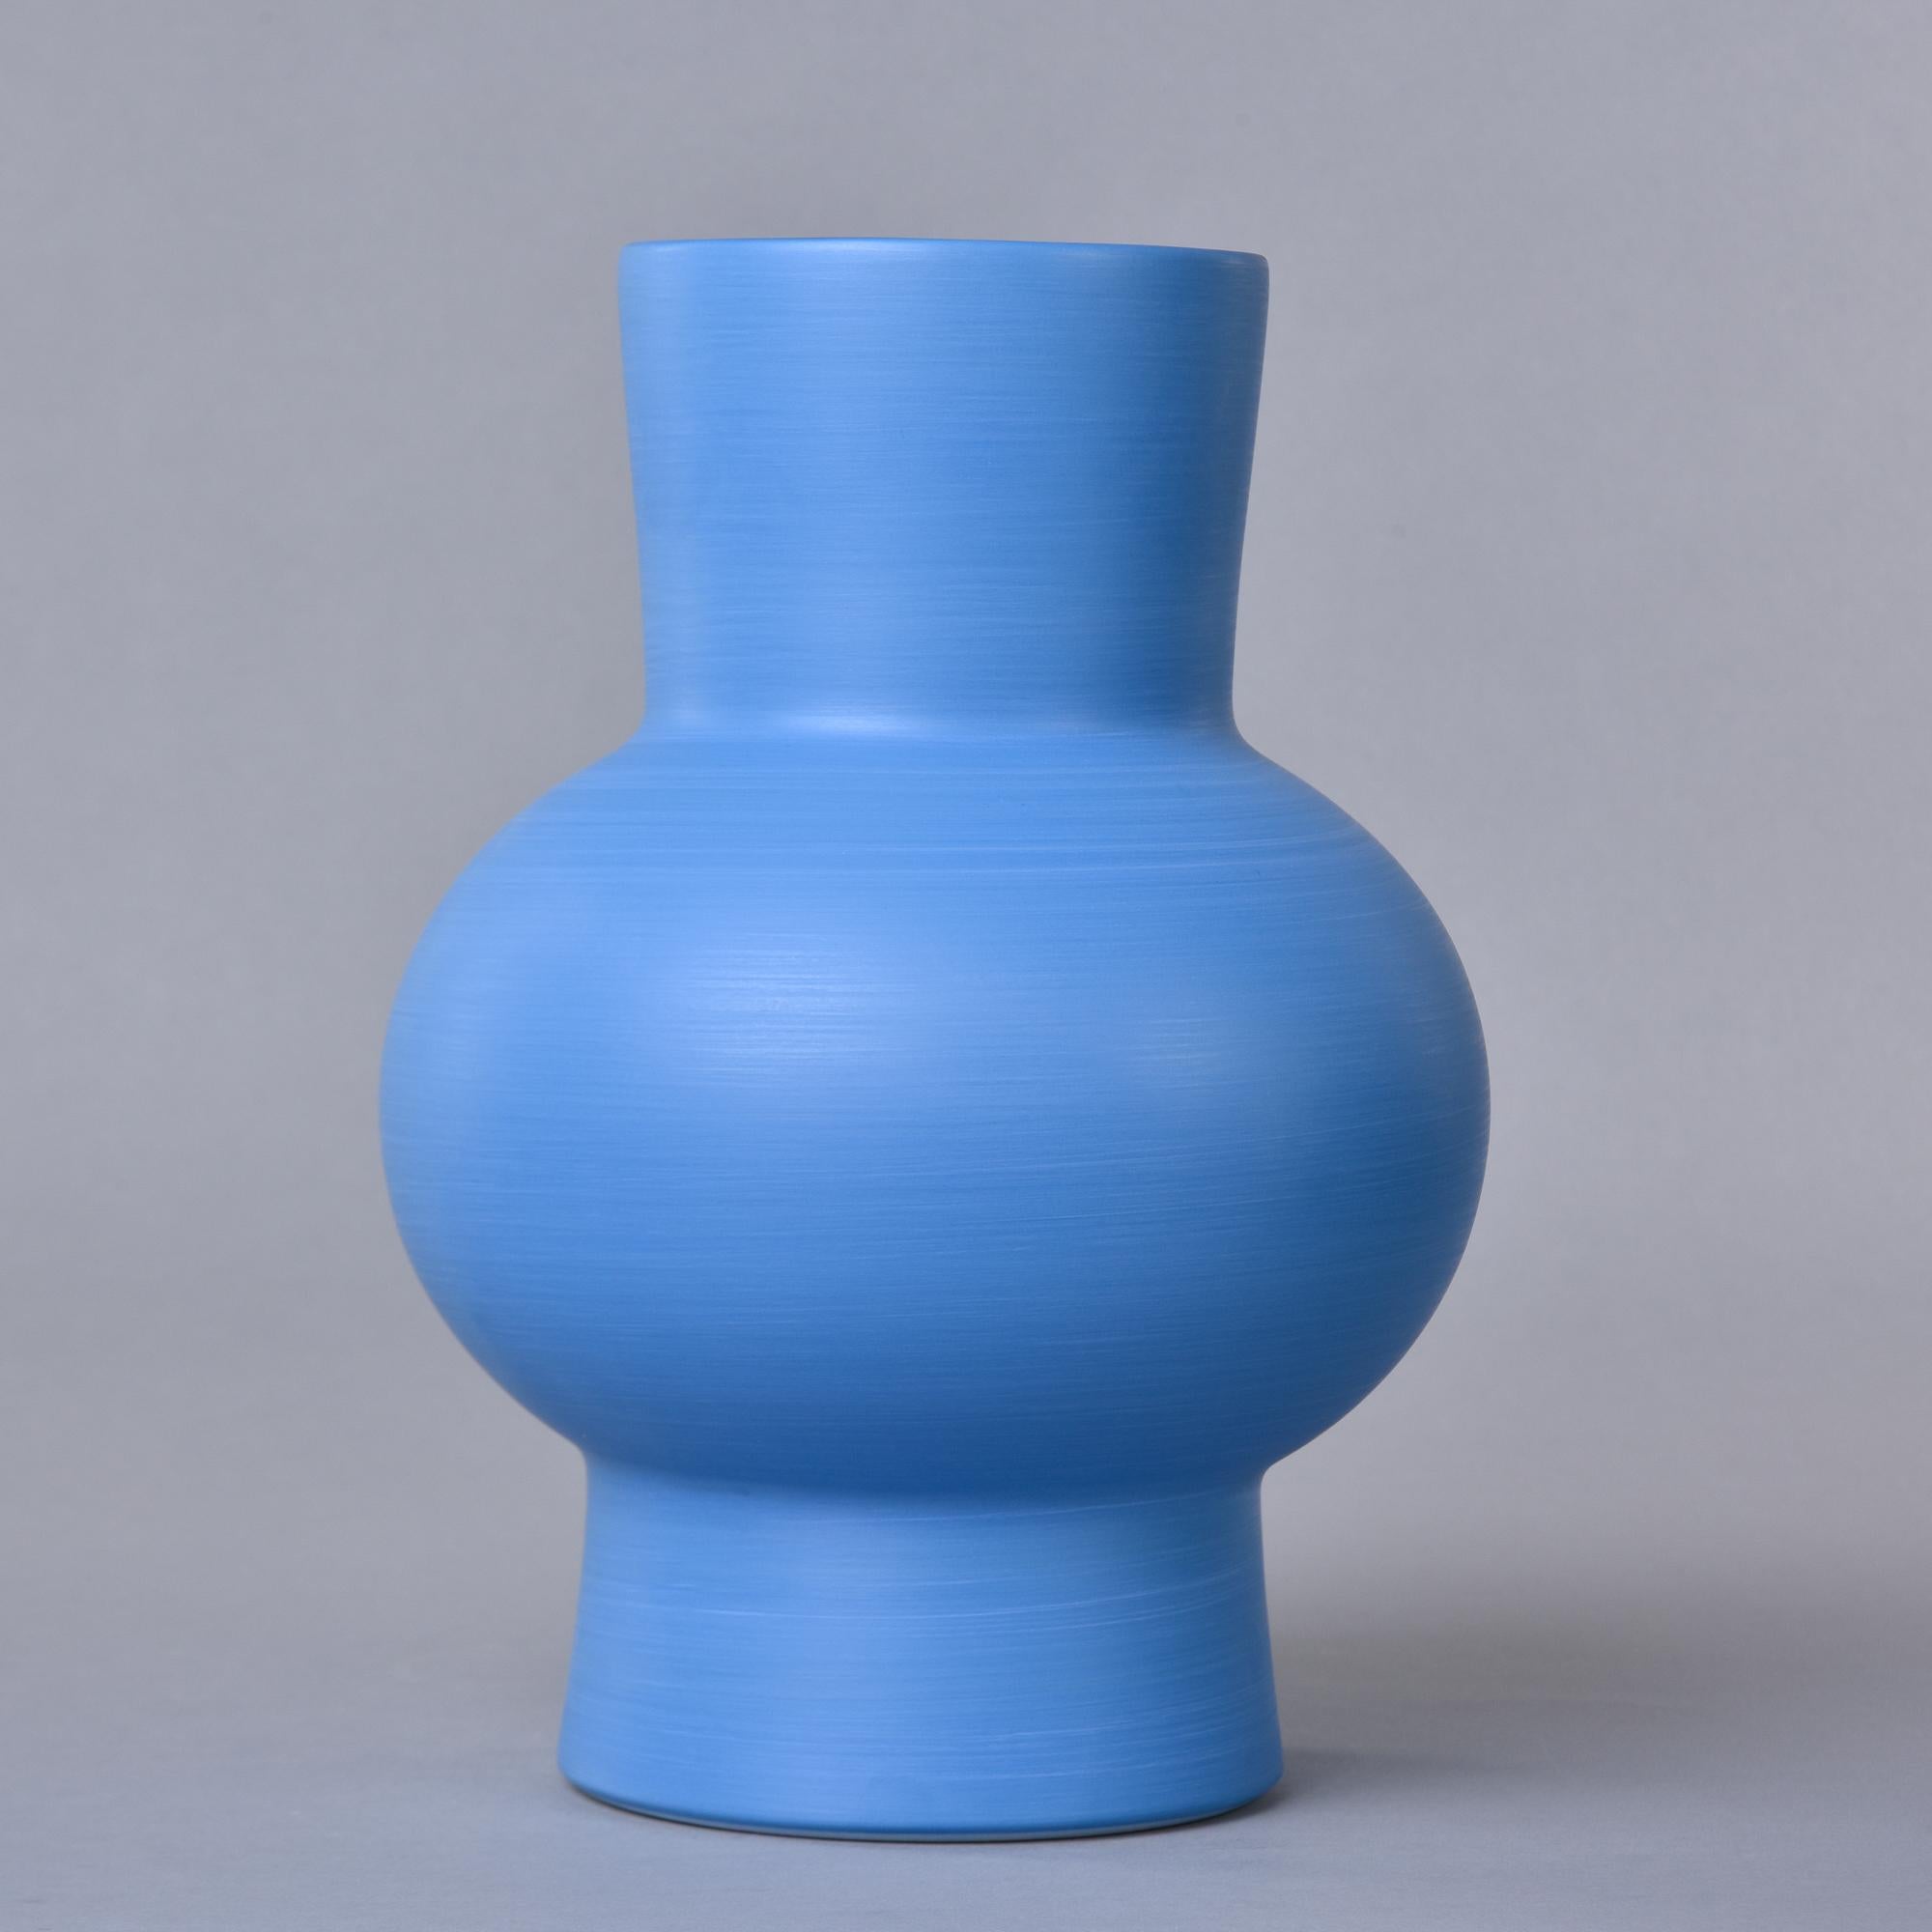 Glazed Rina Menardi Royal Princess Vase in Cornflower Blue Glaze